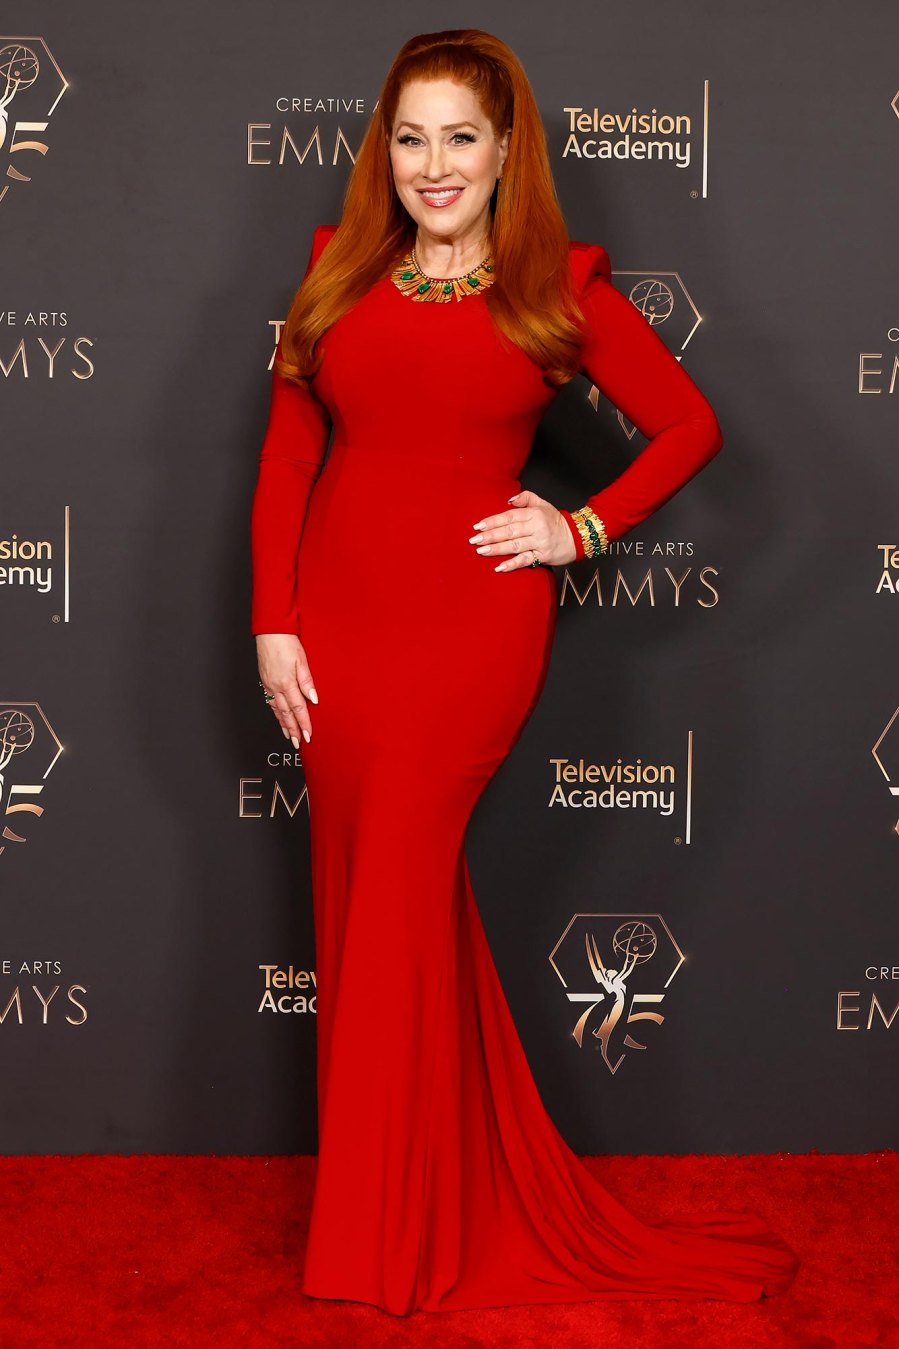 Creative Arts Emmys Red Carpet